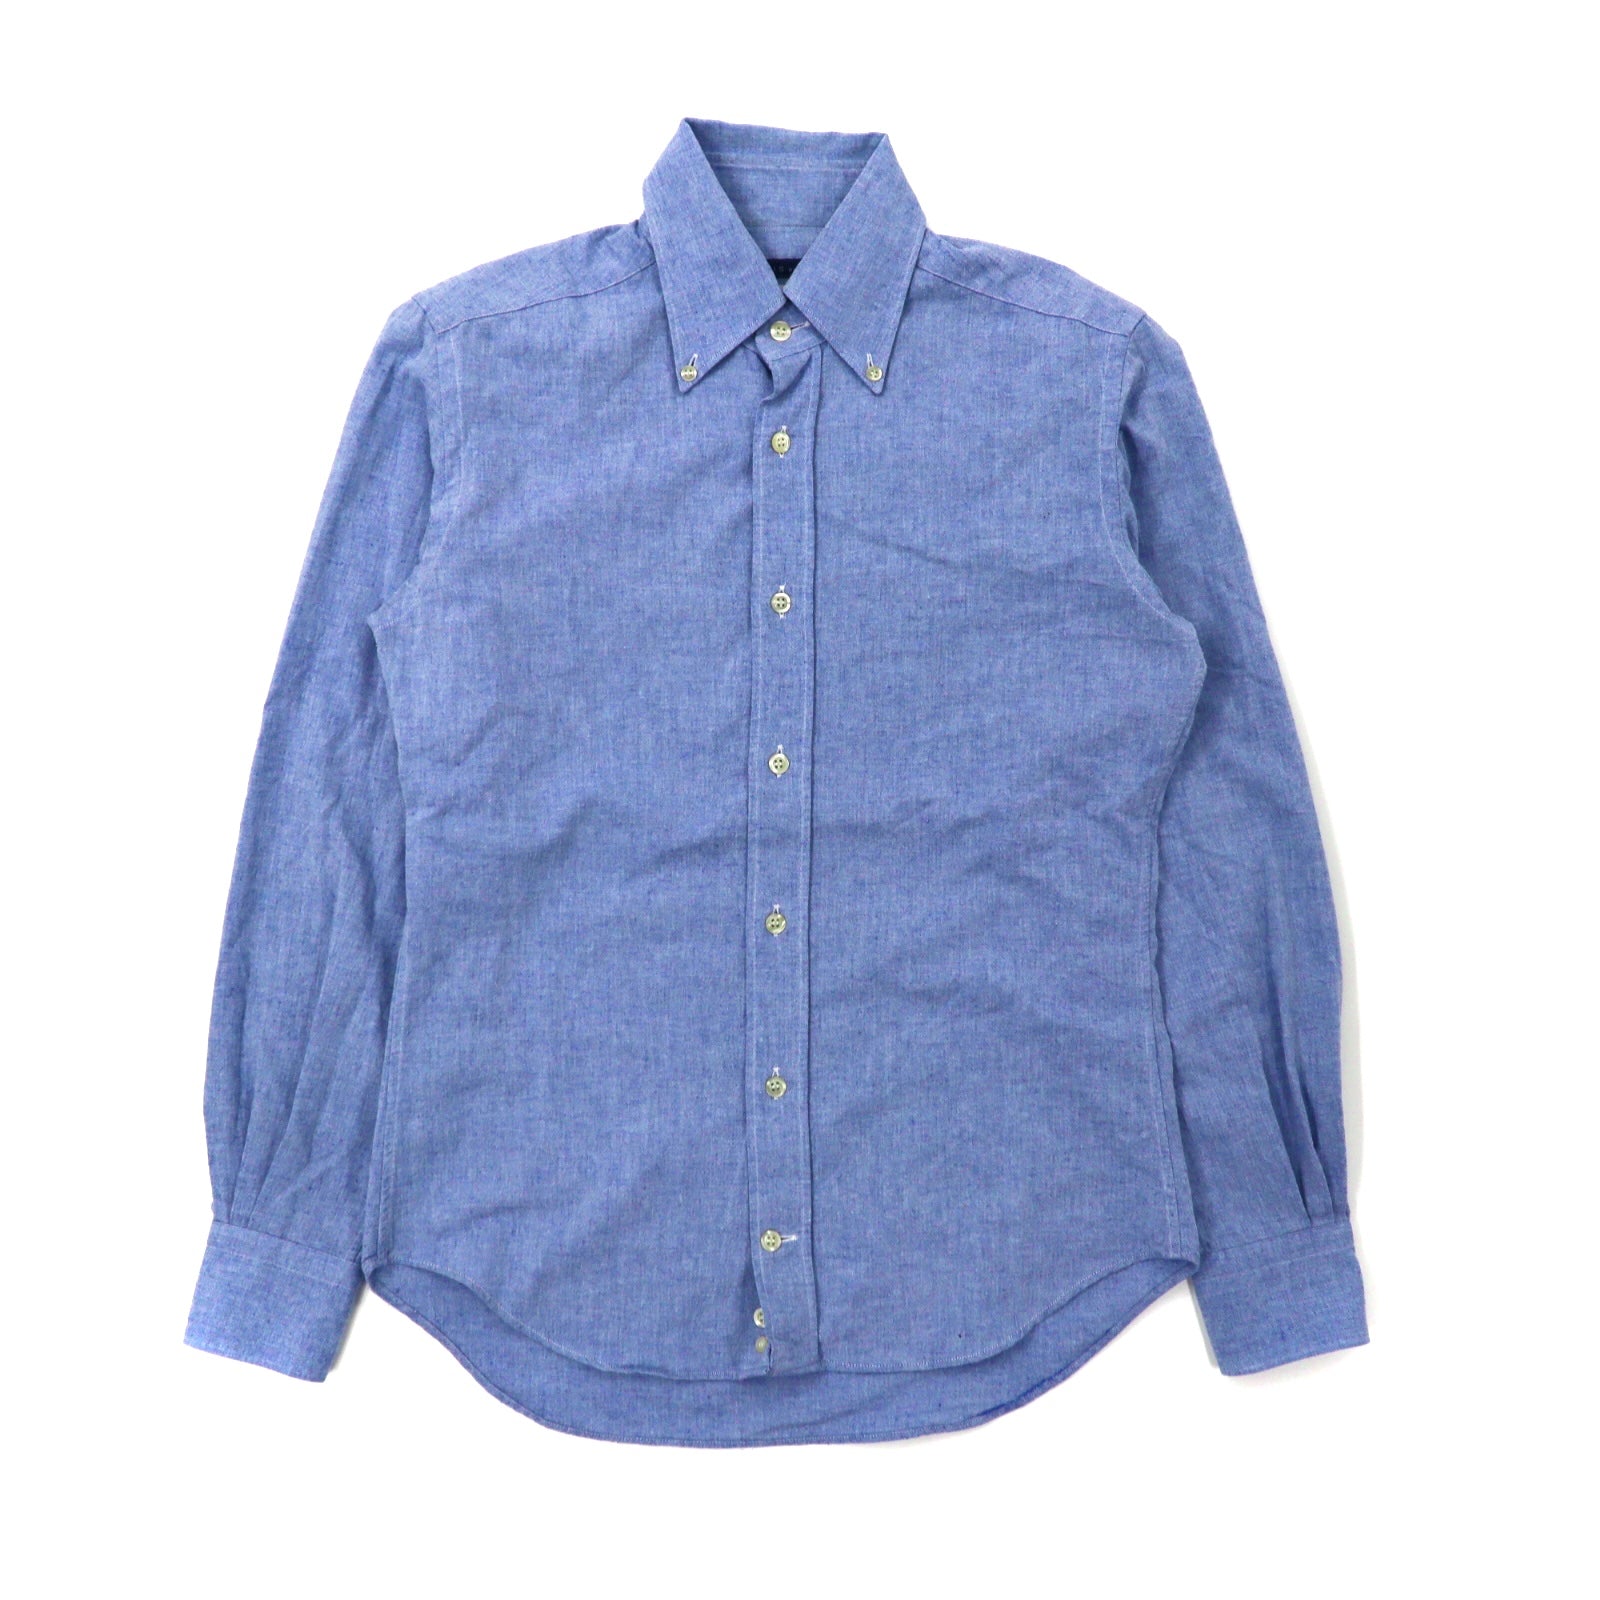 DANOLIS per BEAMS ボタンダウンシャツ XS ブルー SLIM FIT イタリア製